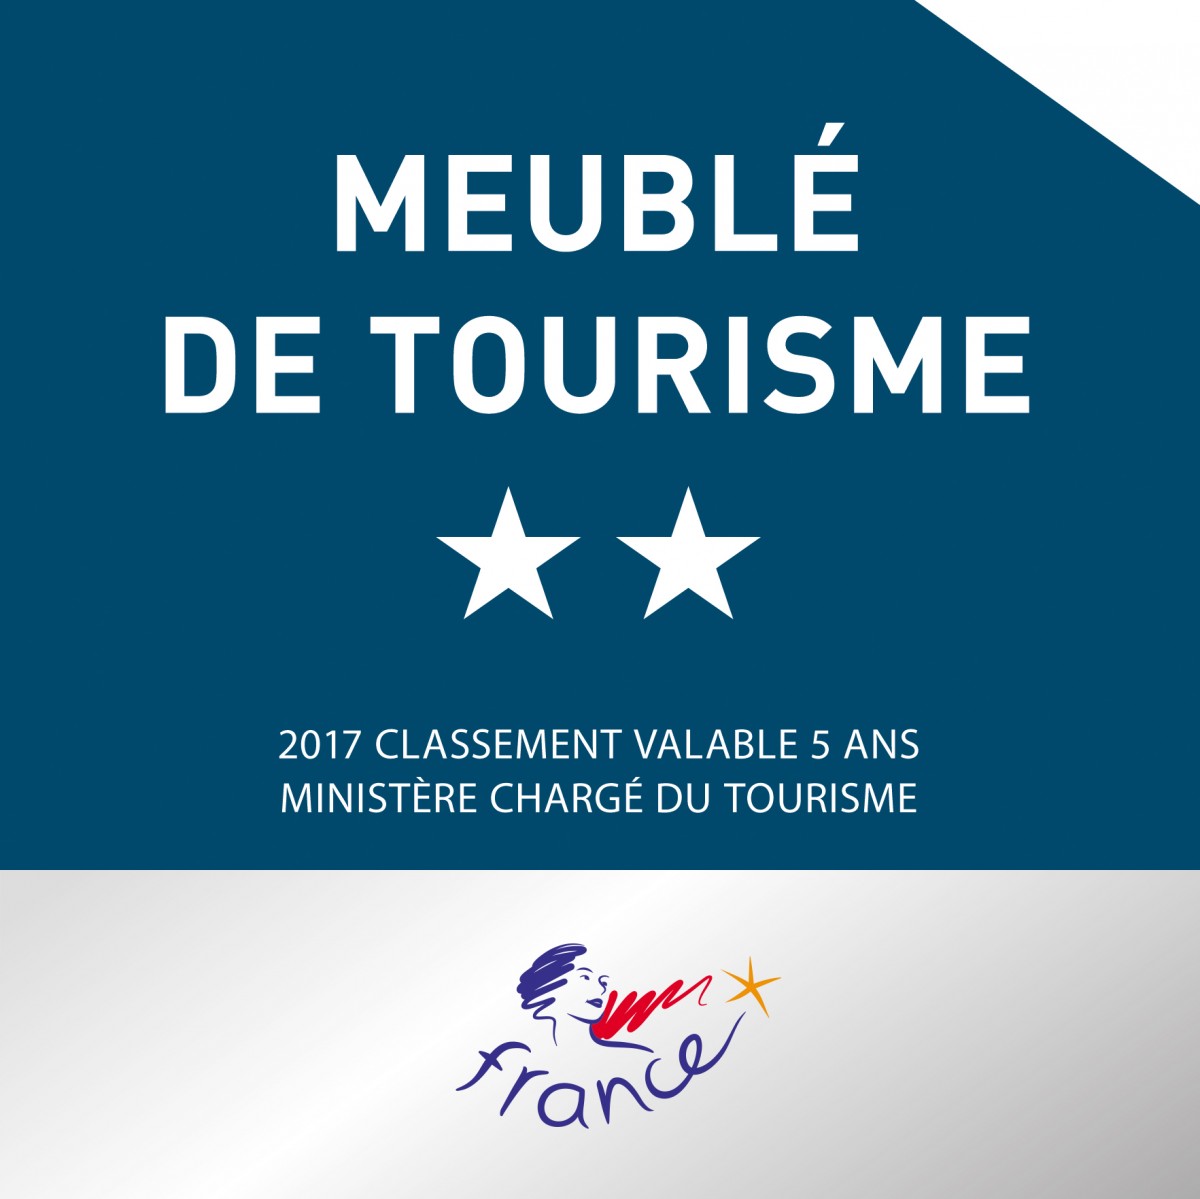 plaque-meuble-tourisme-2-2017-13875